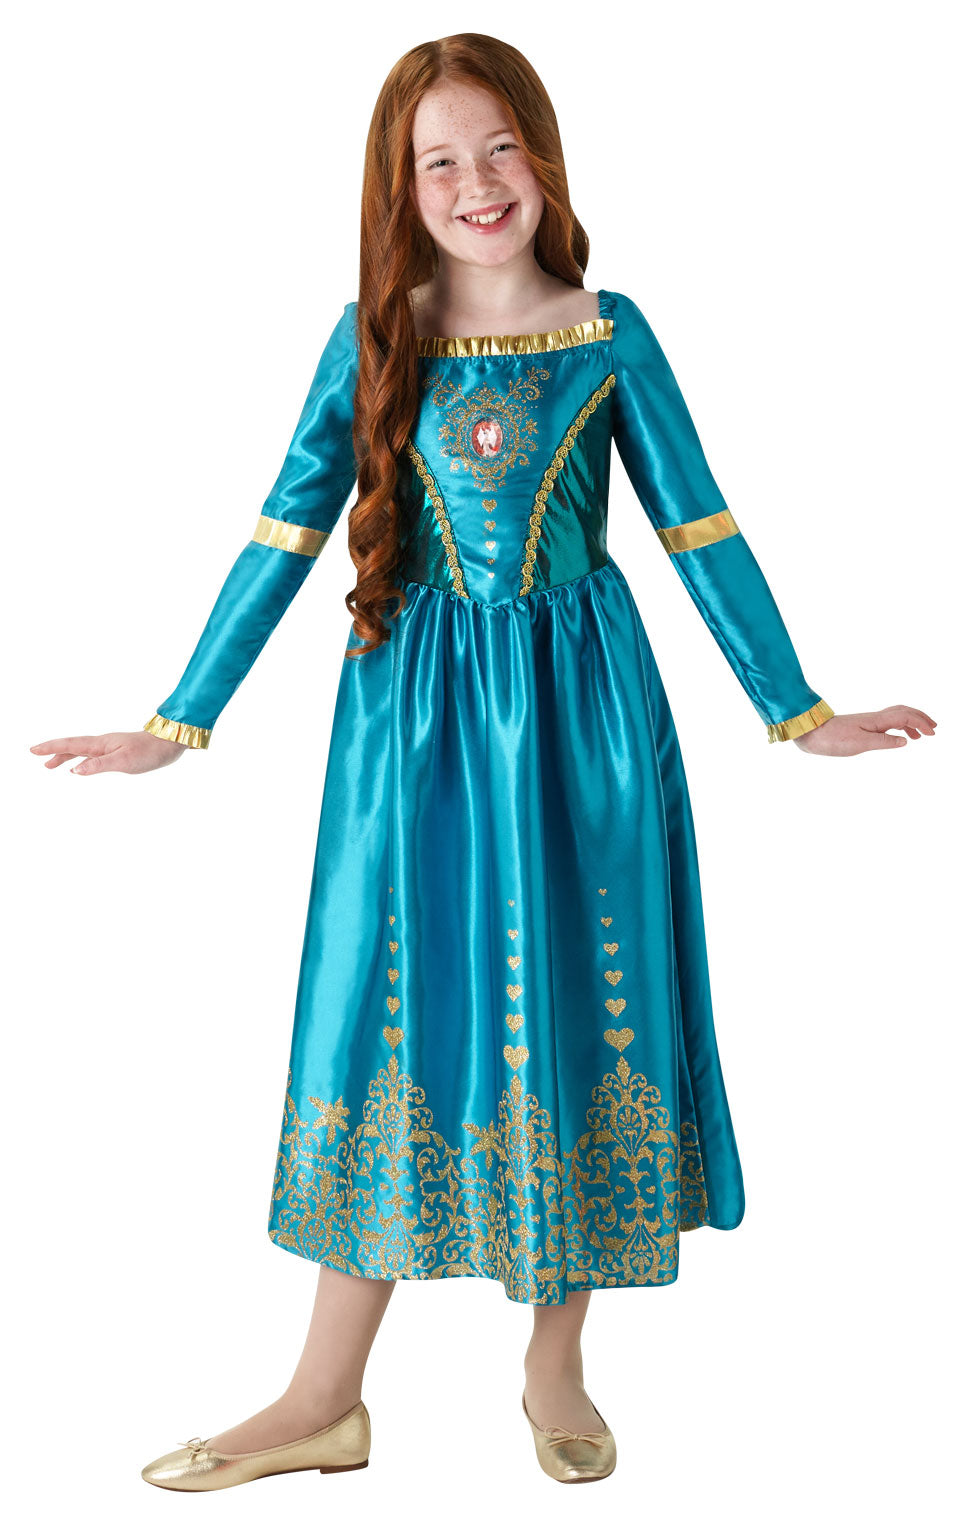 Gem Princess Merida Brave outfit for kids.